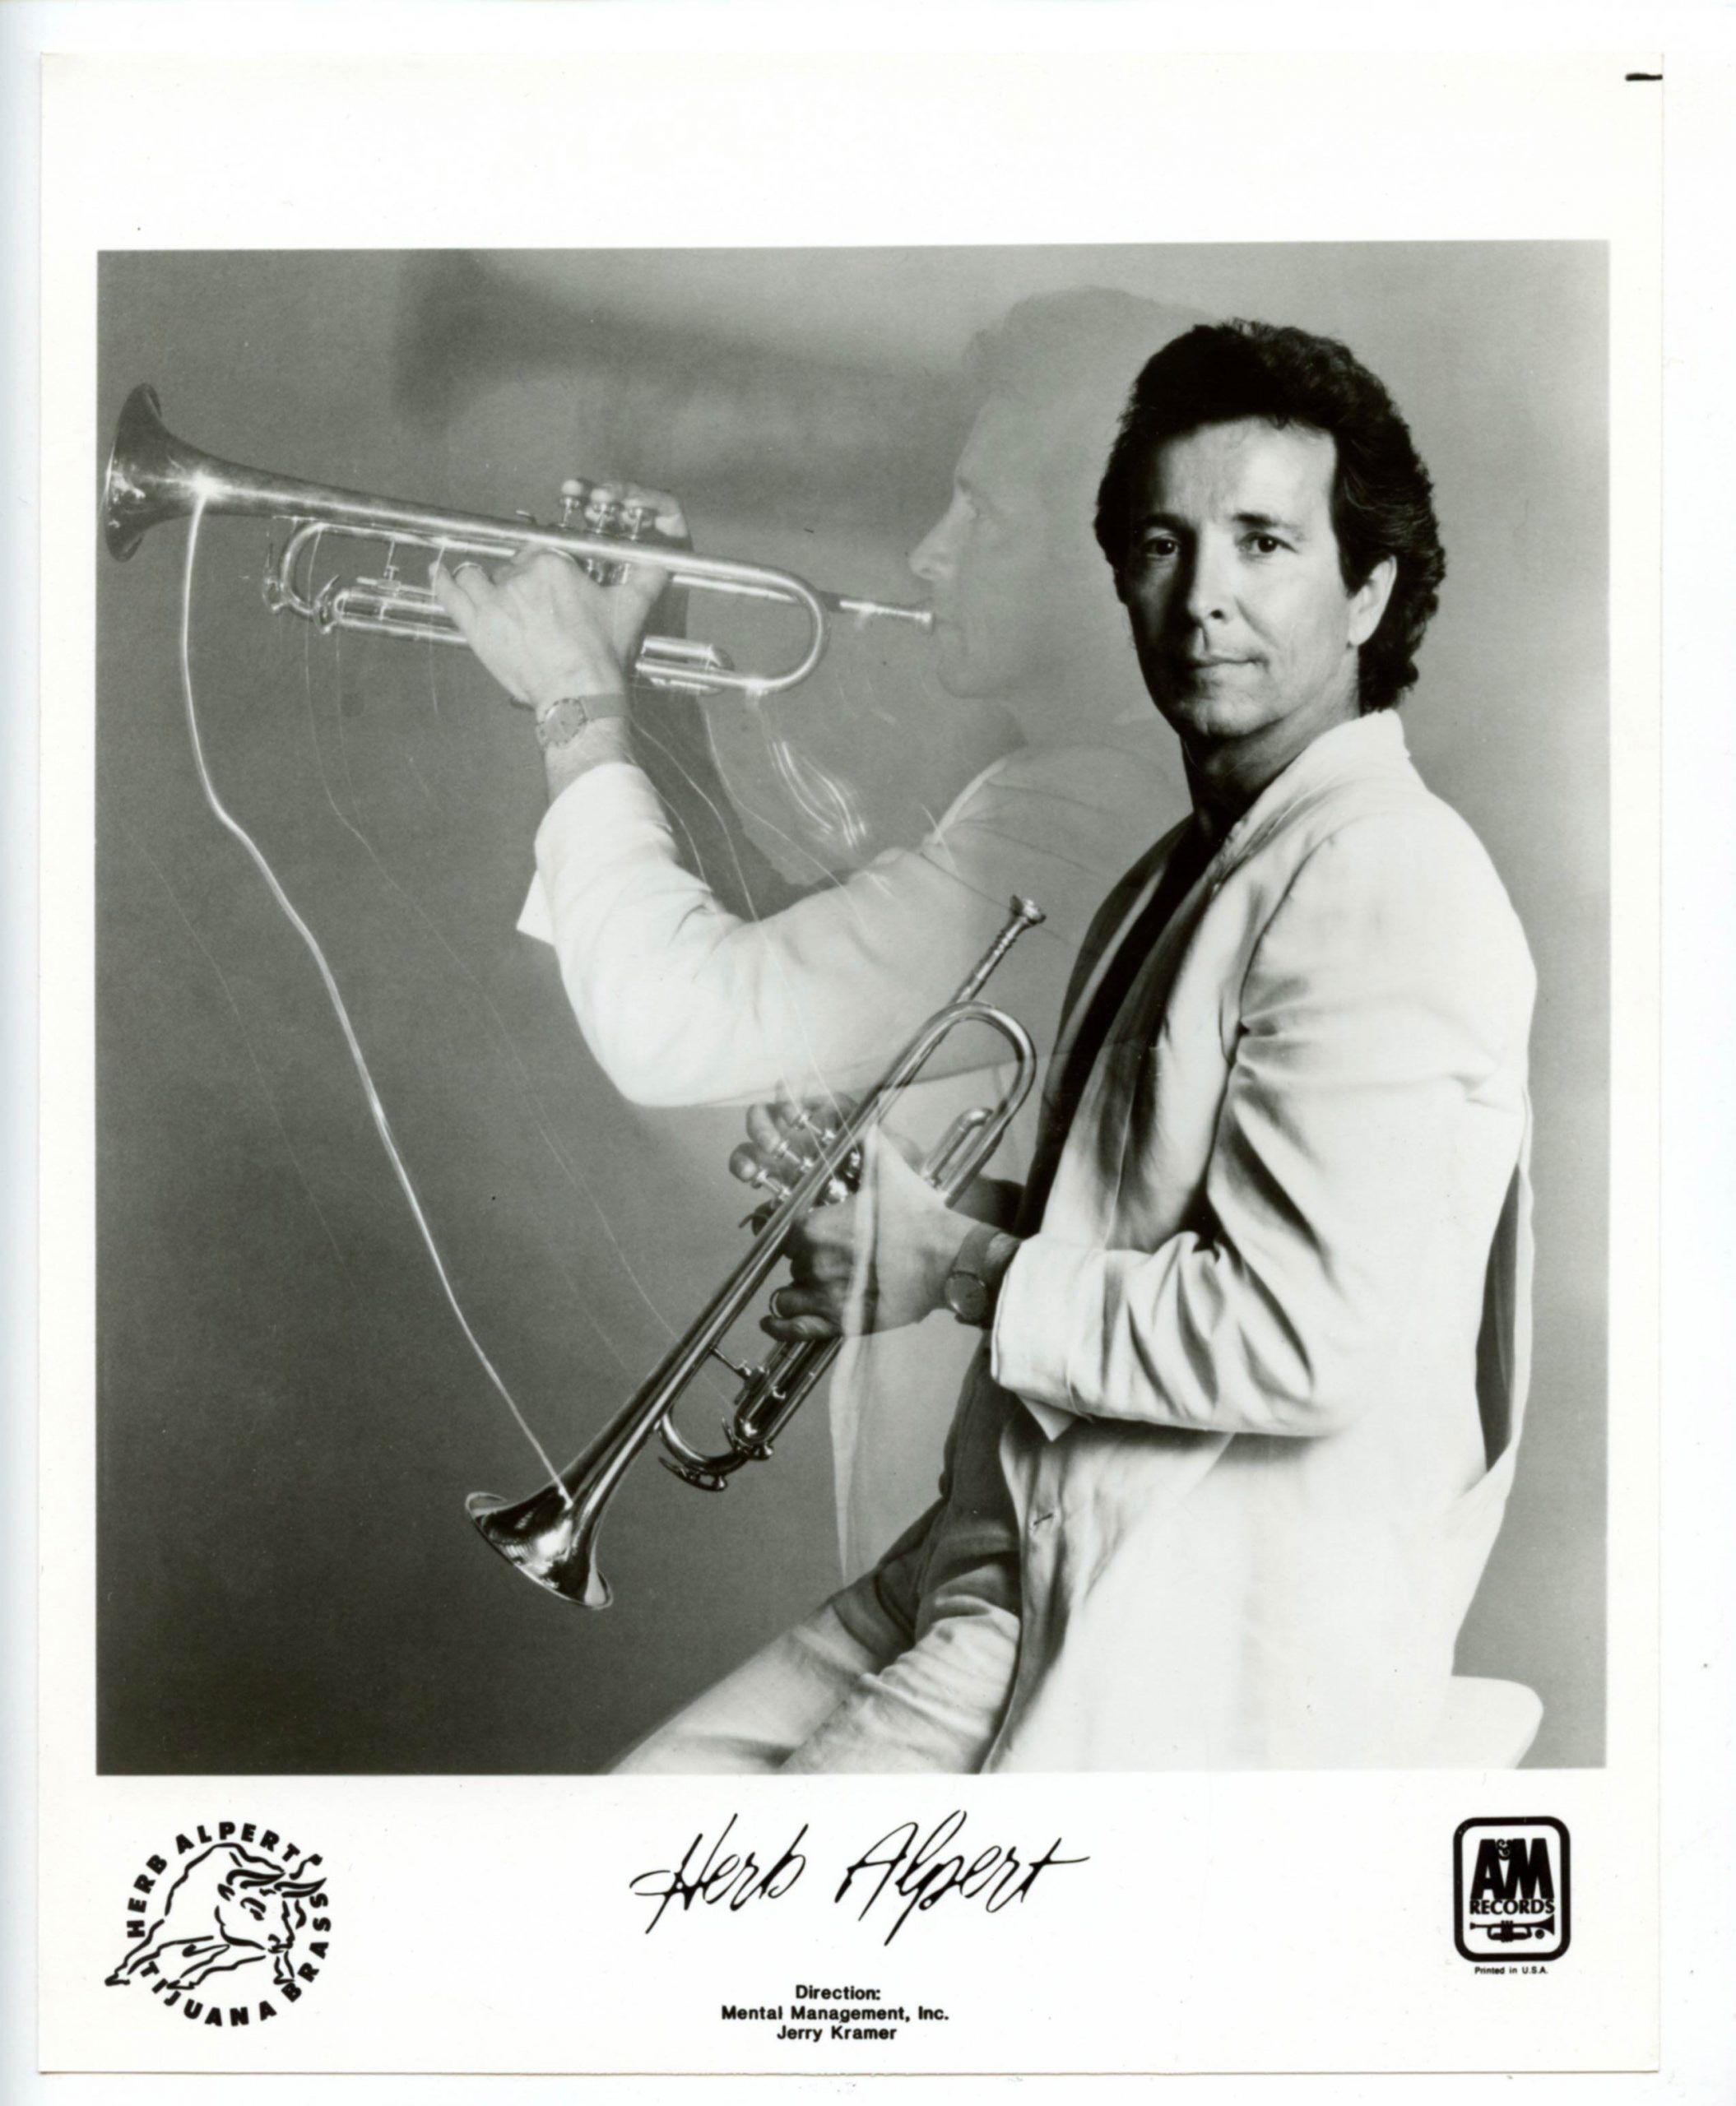 Herb Alpert Photo 1970s A&M Records